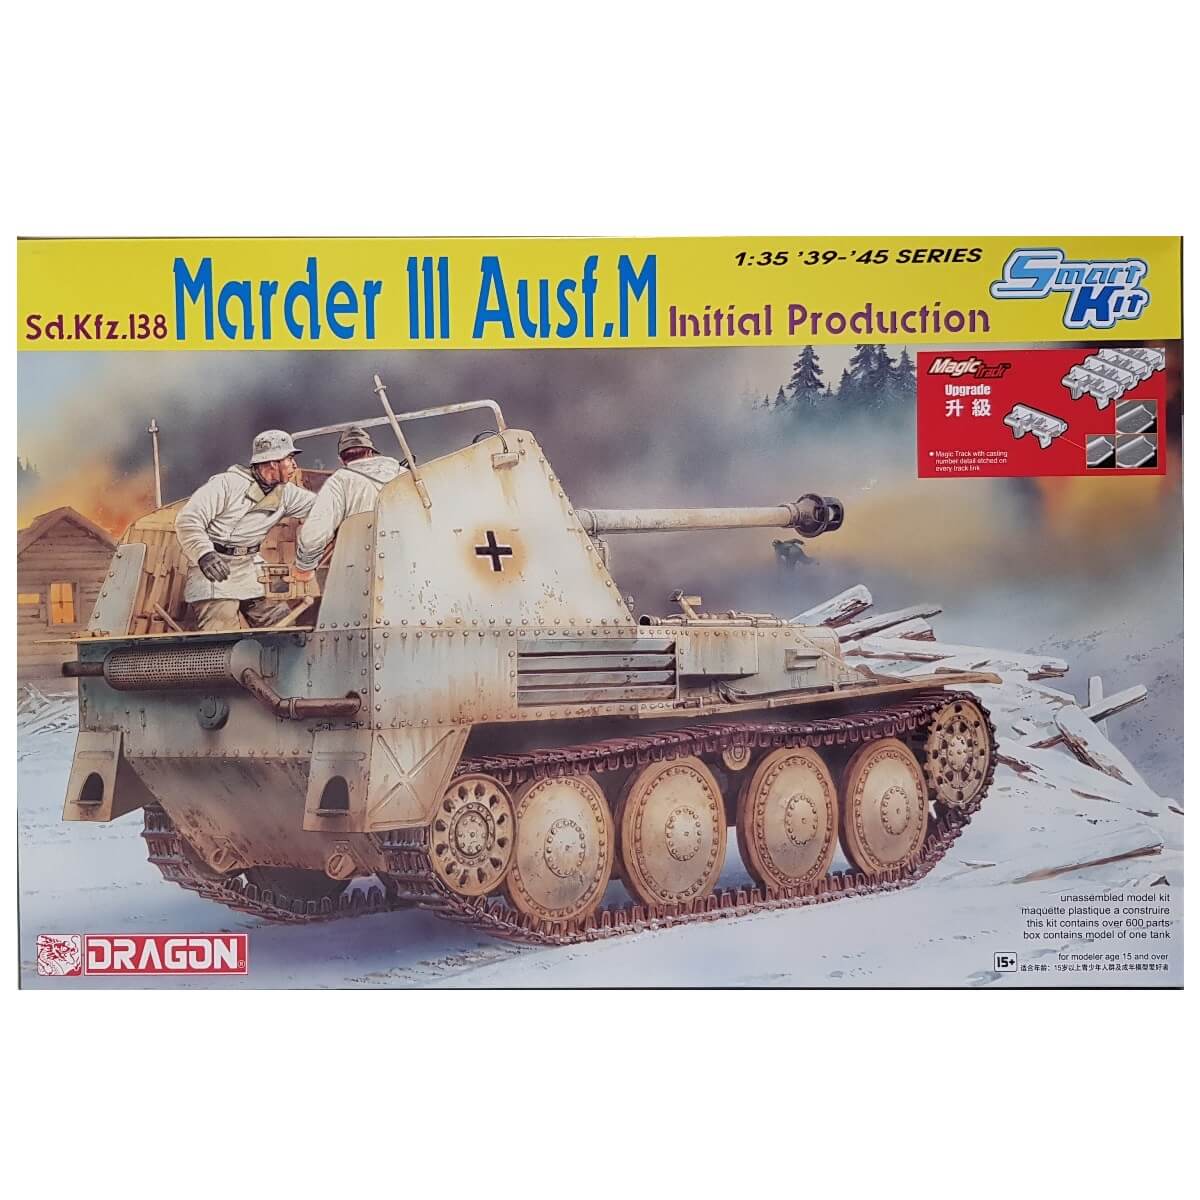 1:35 Sd.Kfz. 138 Marder III Ausf. M Initial Production - DRAGON